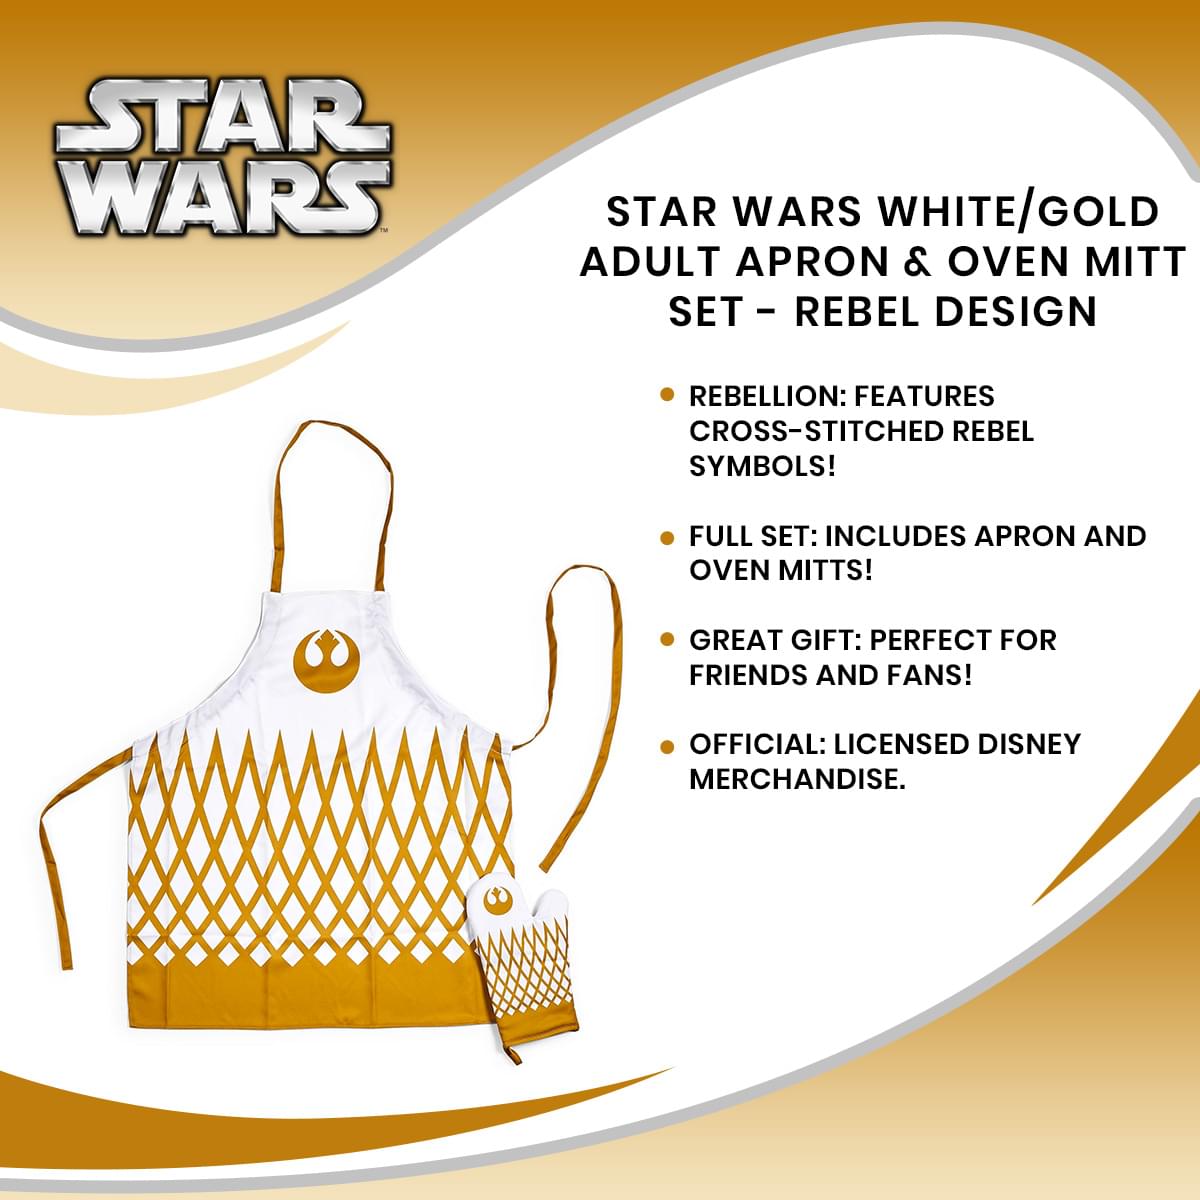 Star Wars White/Gold Adult Apron & Oven Mitt Set - Rebel Design